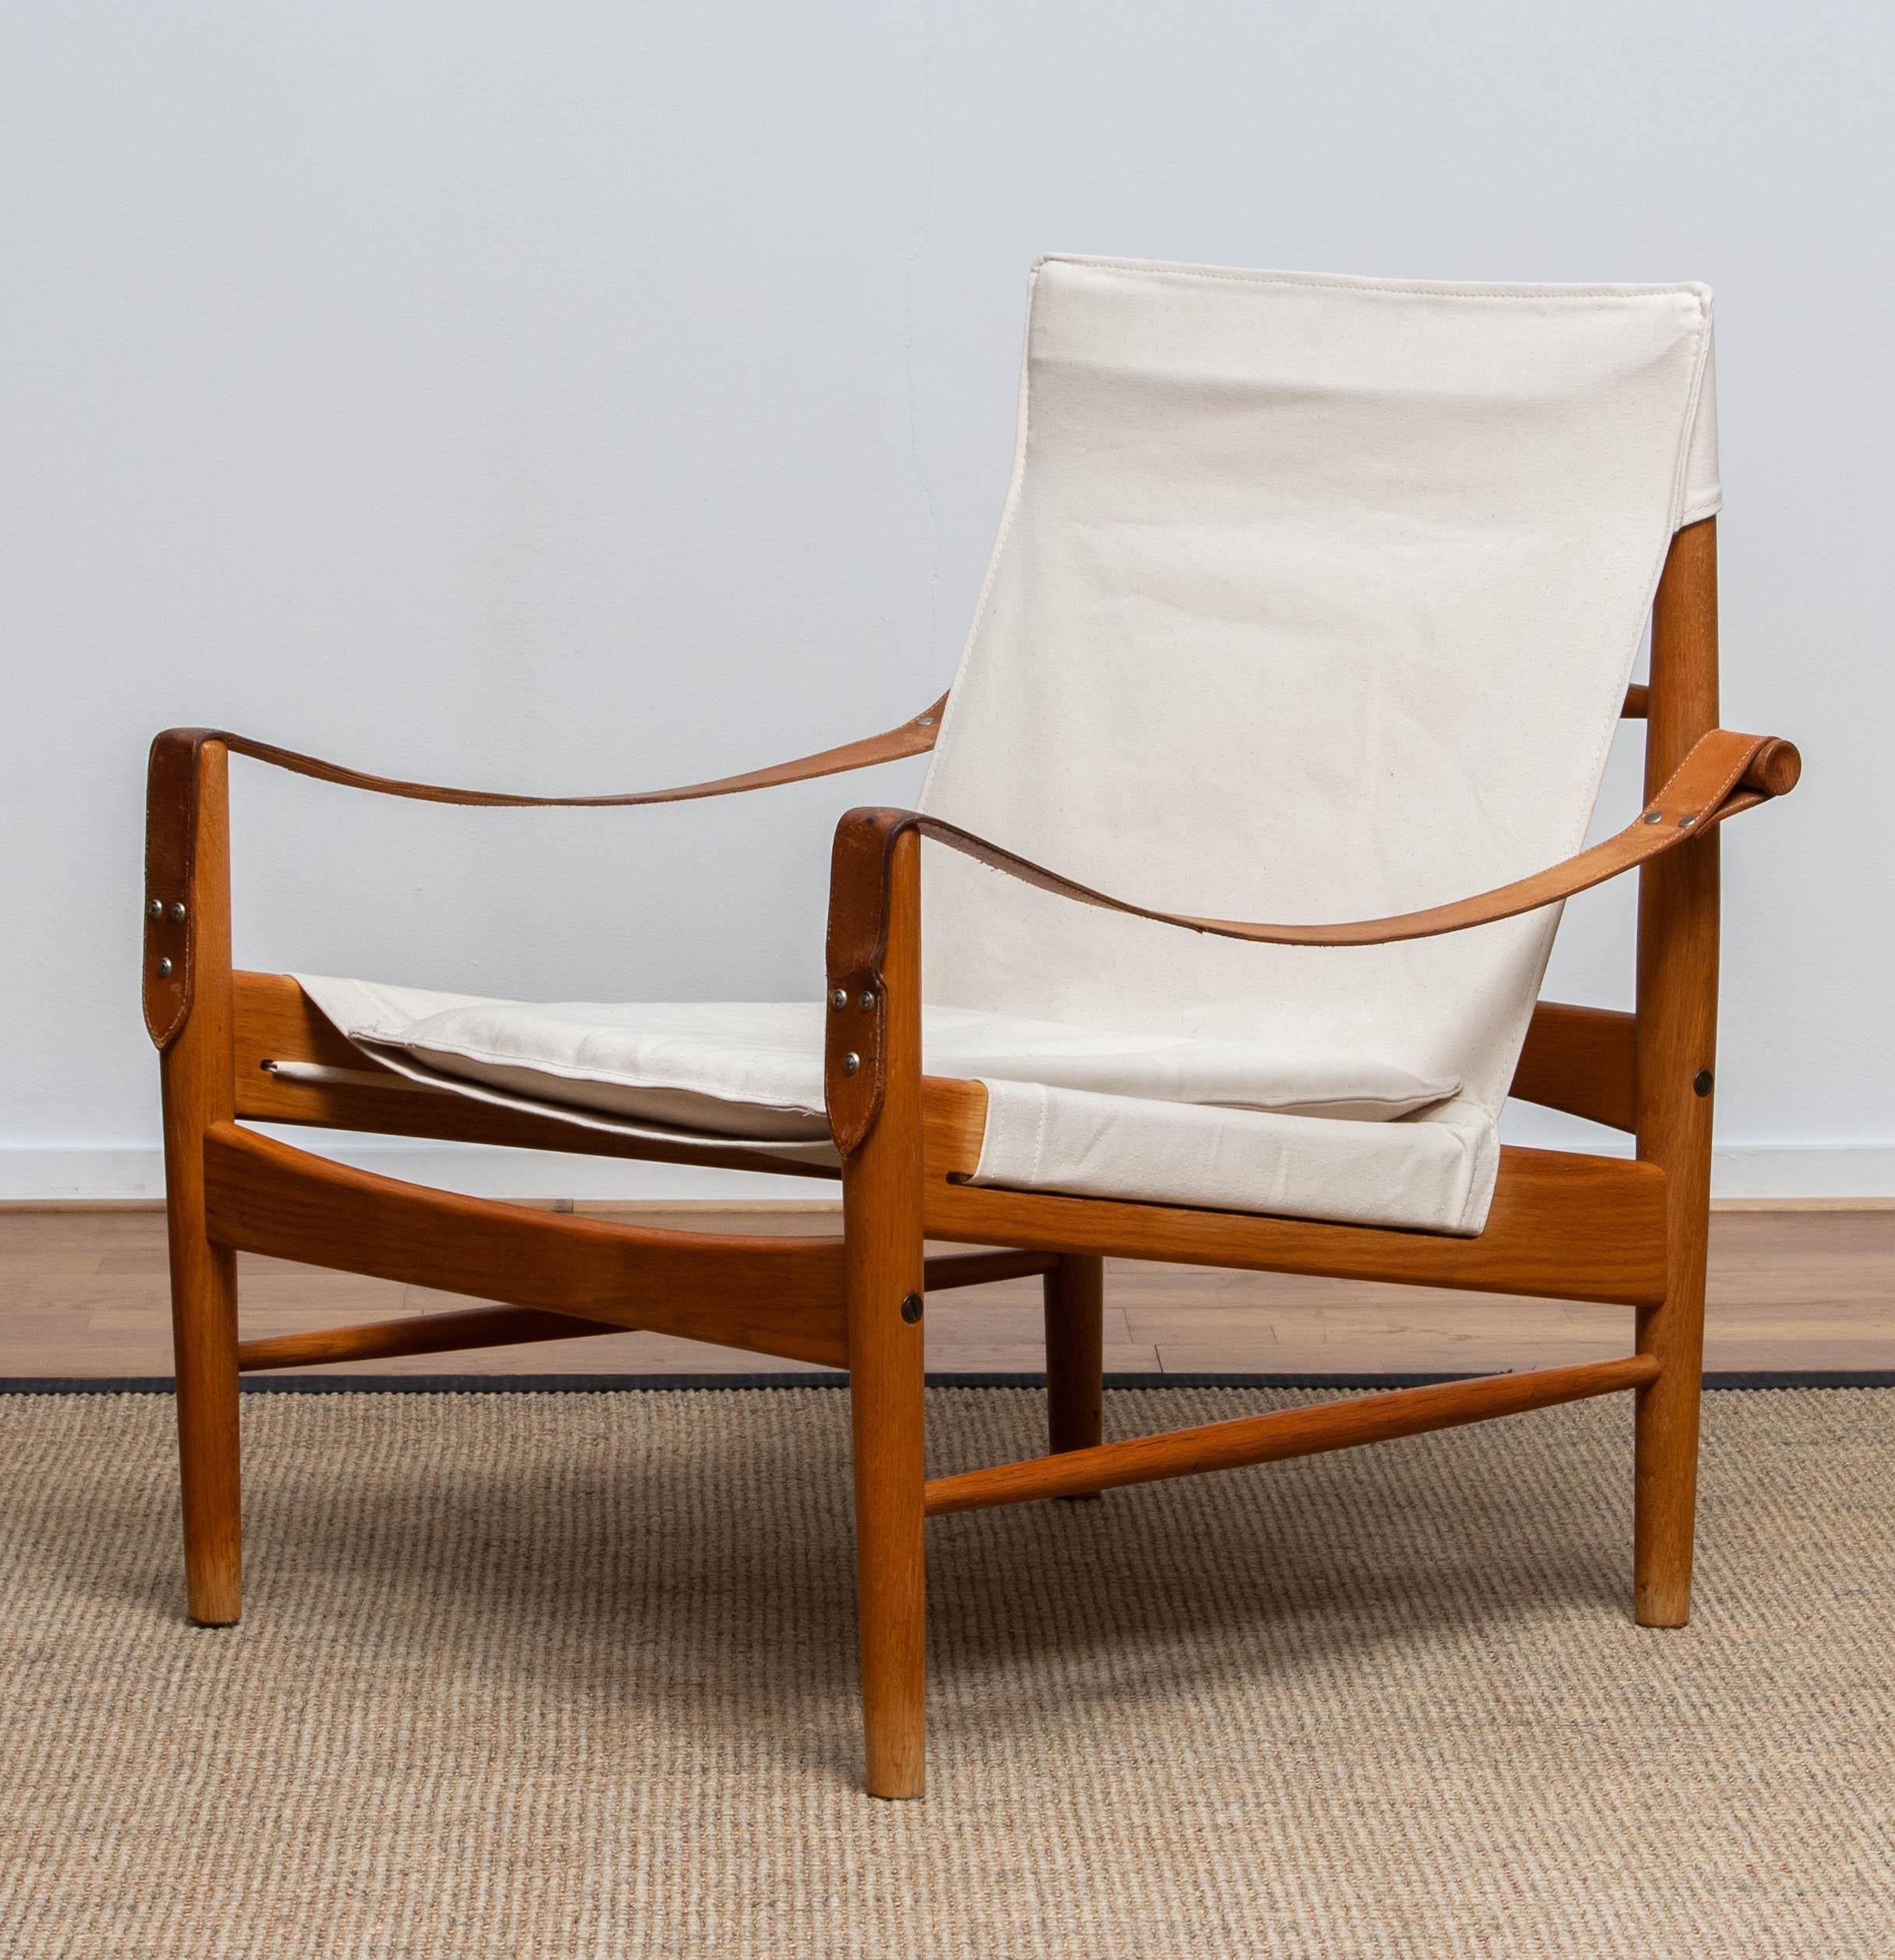 Mid-20th Century 1960s, Safari Lounge Chair by Hans Olsen for Viska Möbler in Kinna, Sweden 1 For Sale